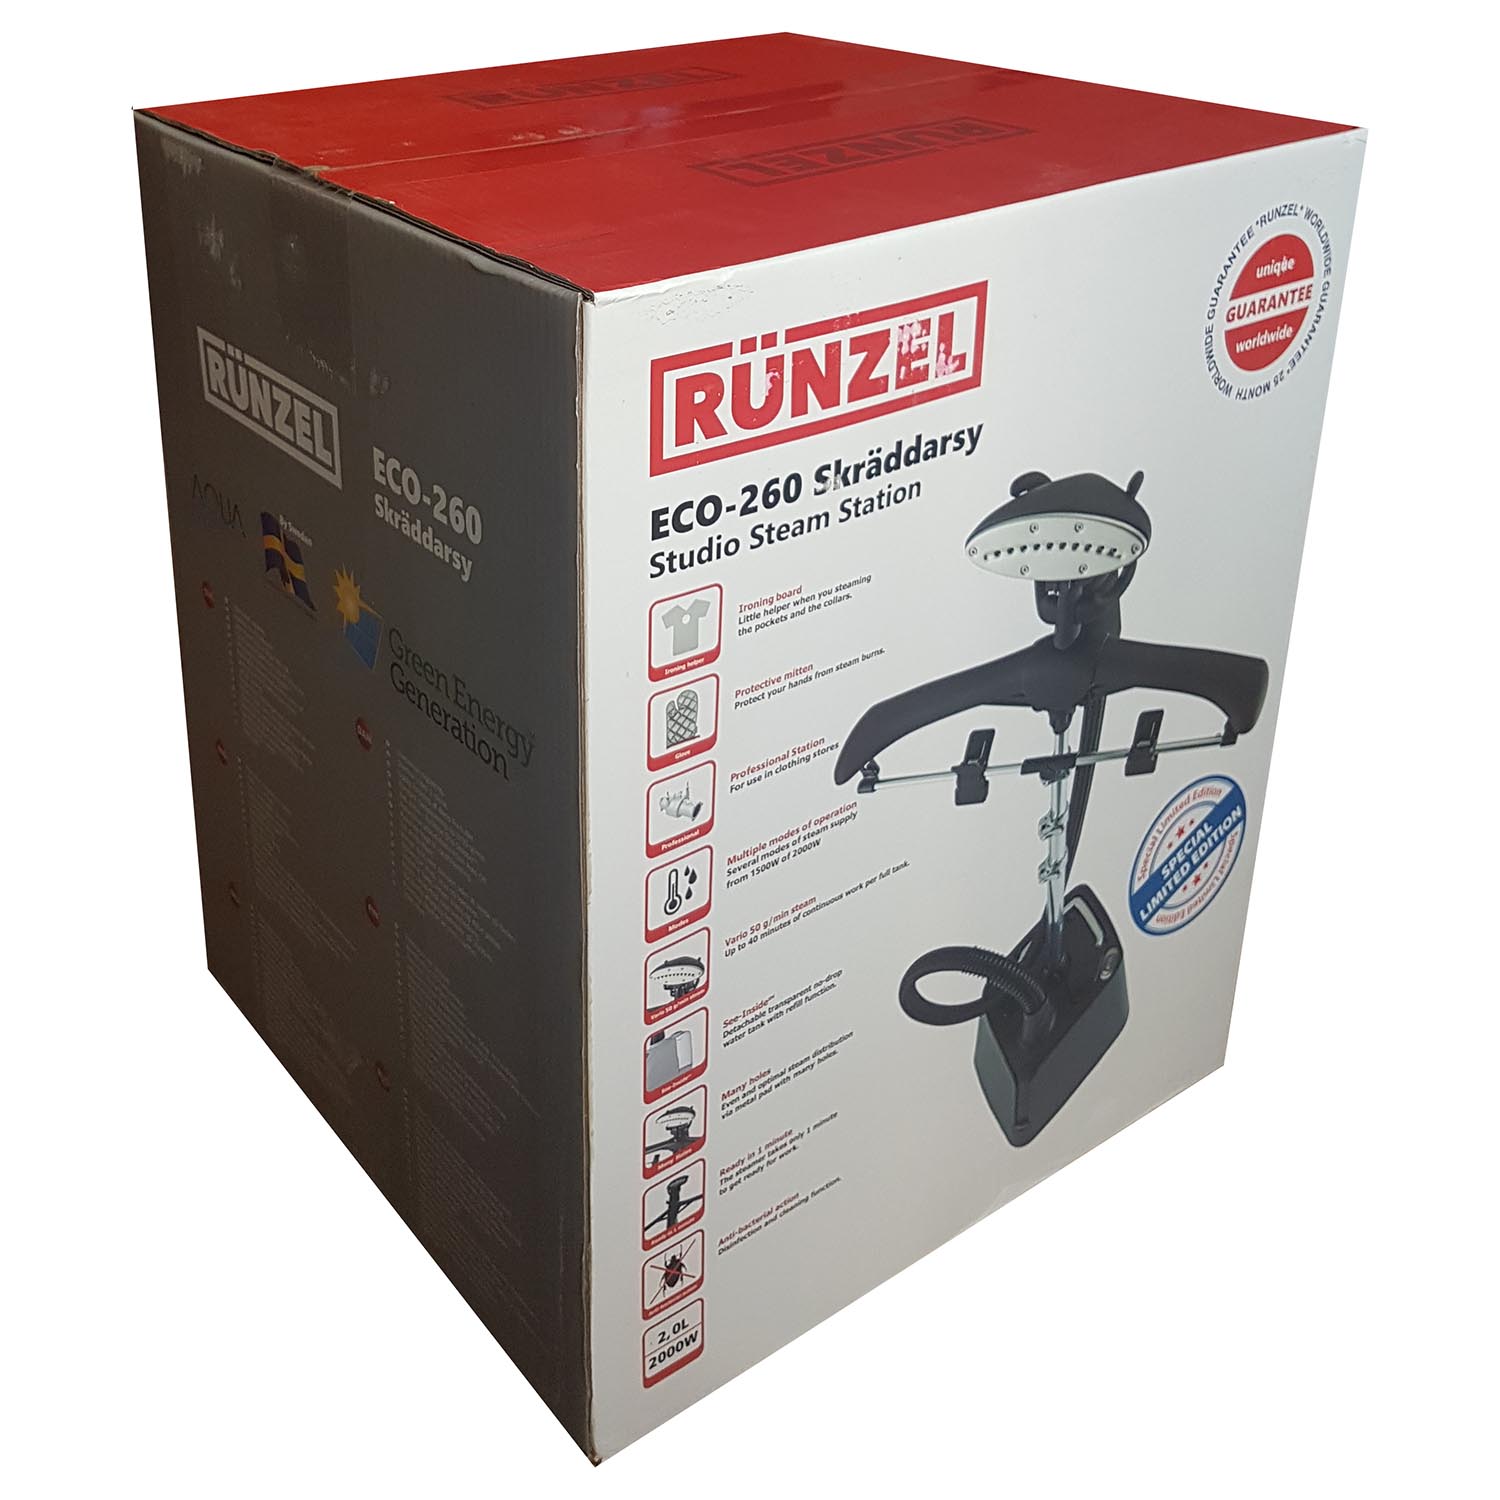 Отпариватель Runzel Eco-260 Skraddarsy - упаковка, коробка